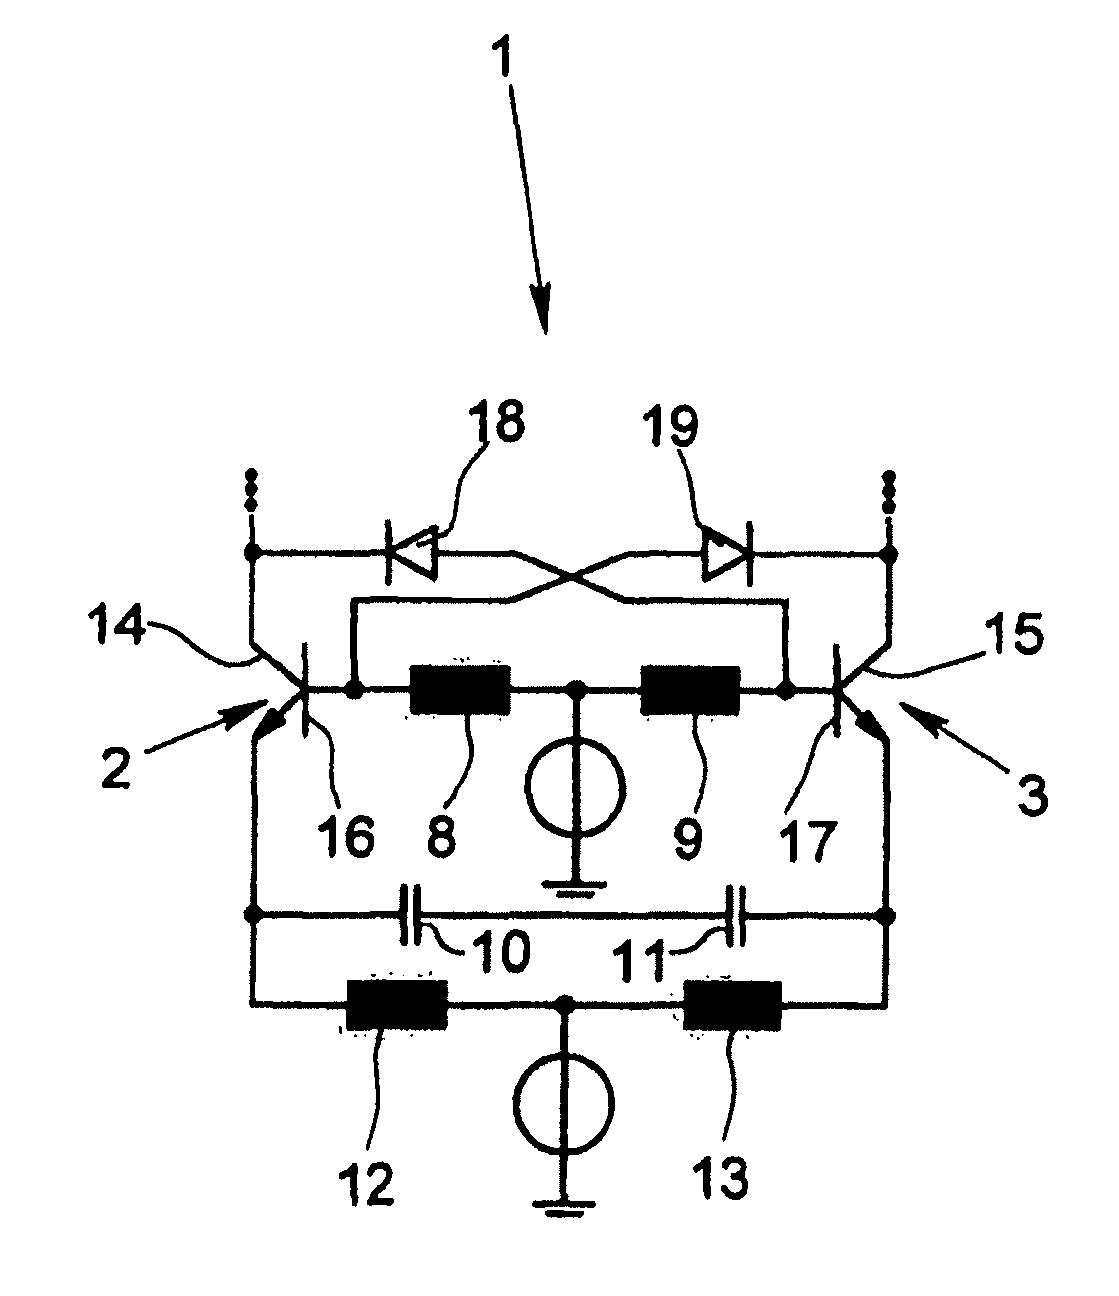 Circuit arrangement for creating microwave oscillations